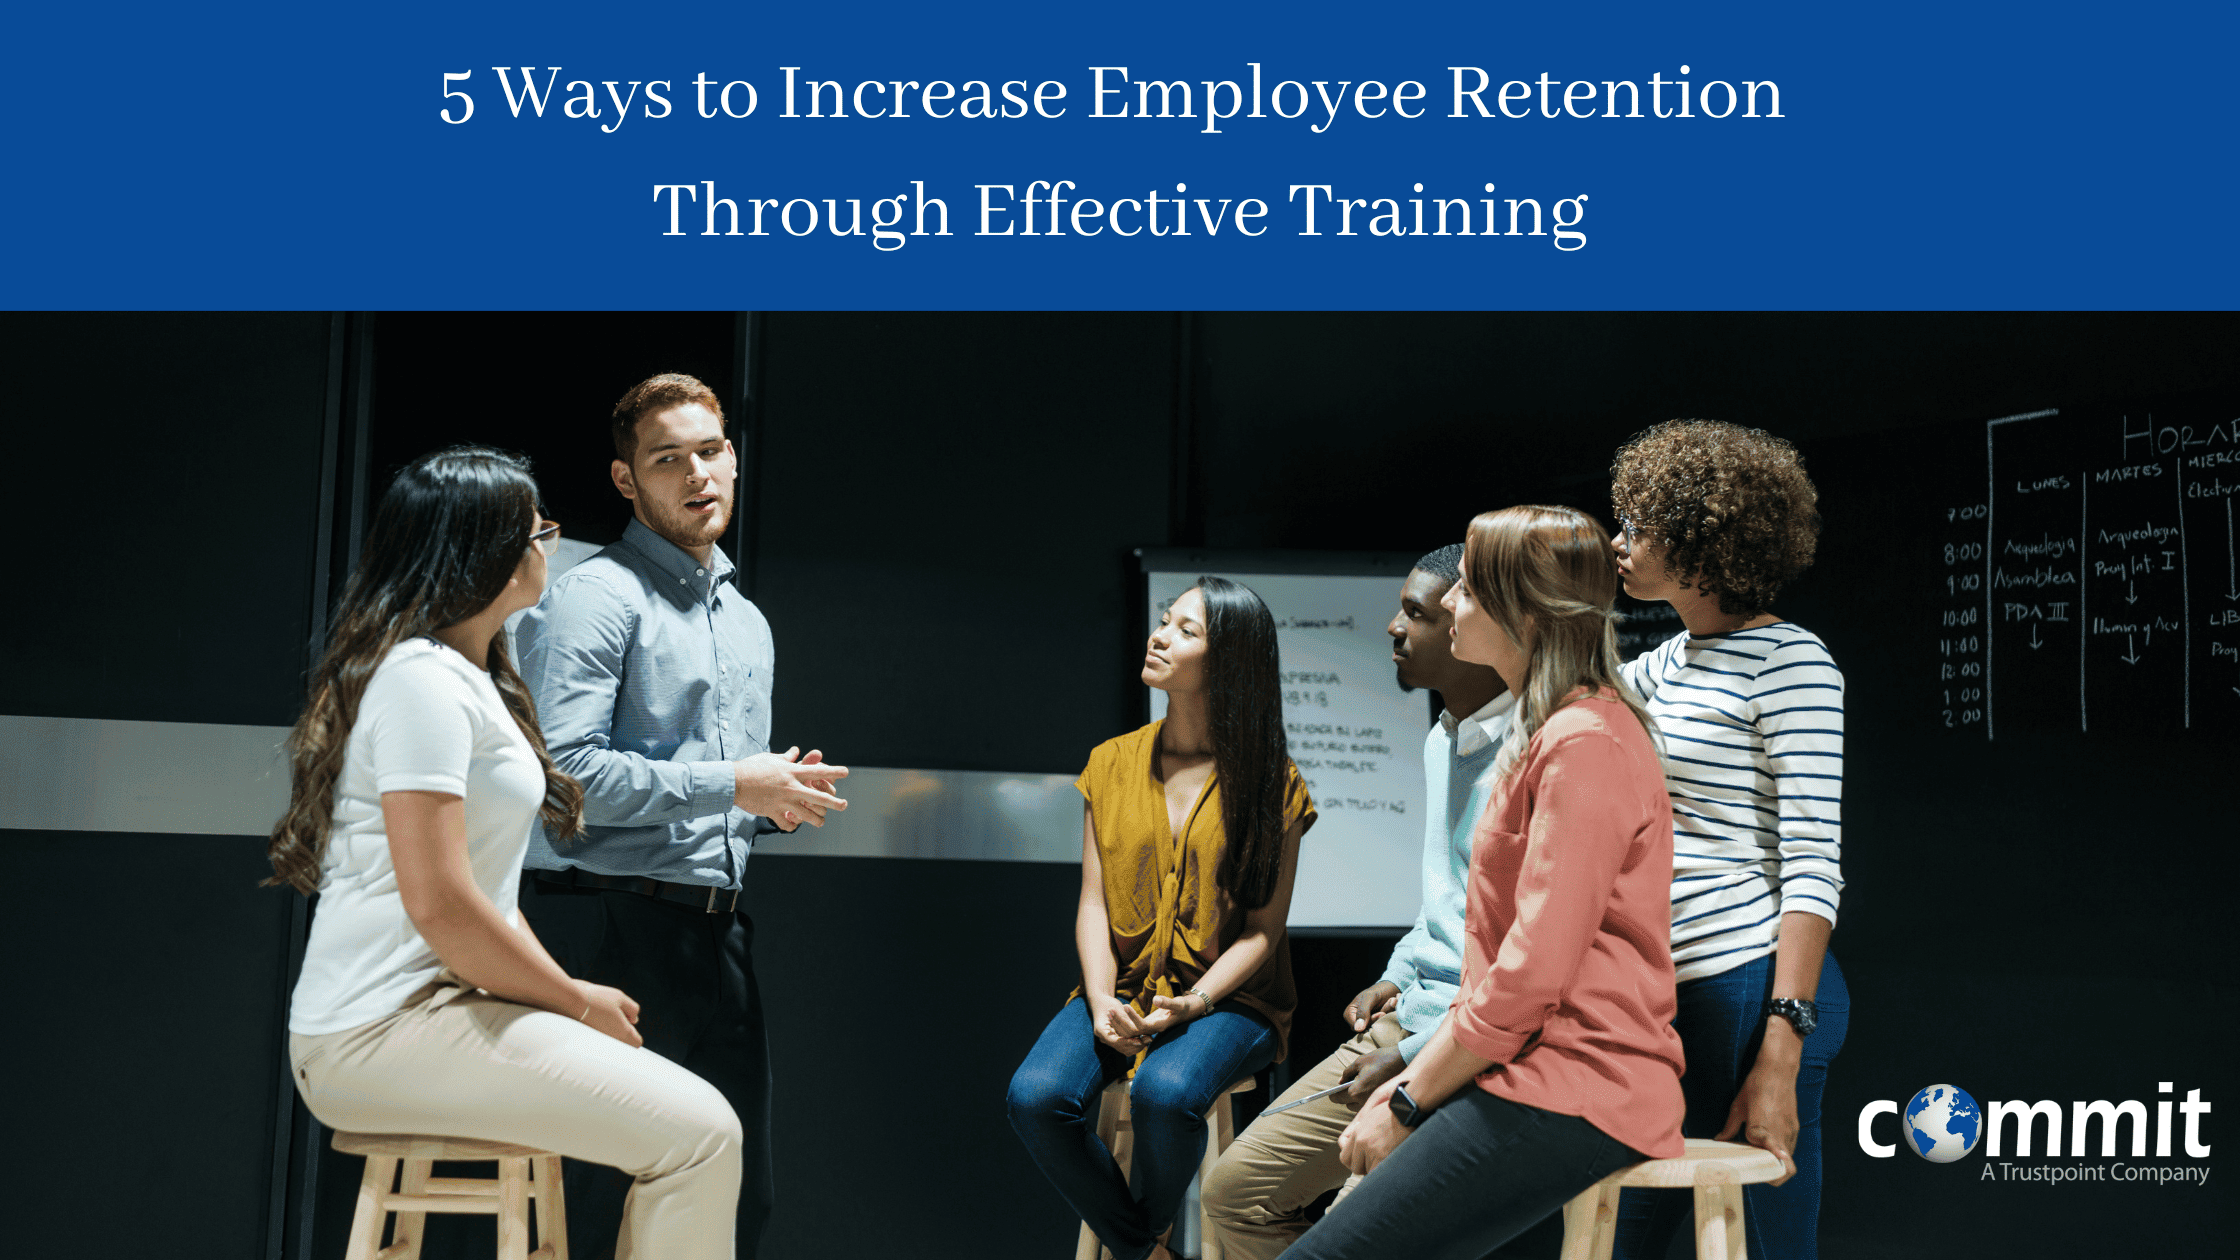 5 Ways to Increase Employee Retention Through Effective Training